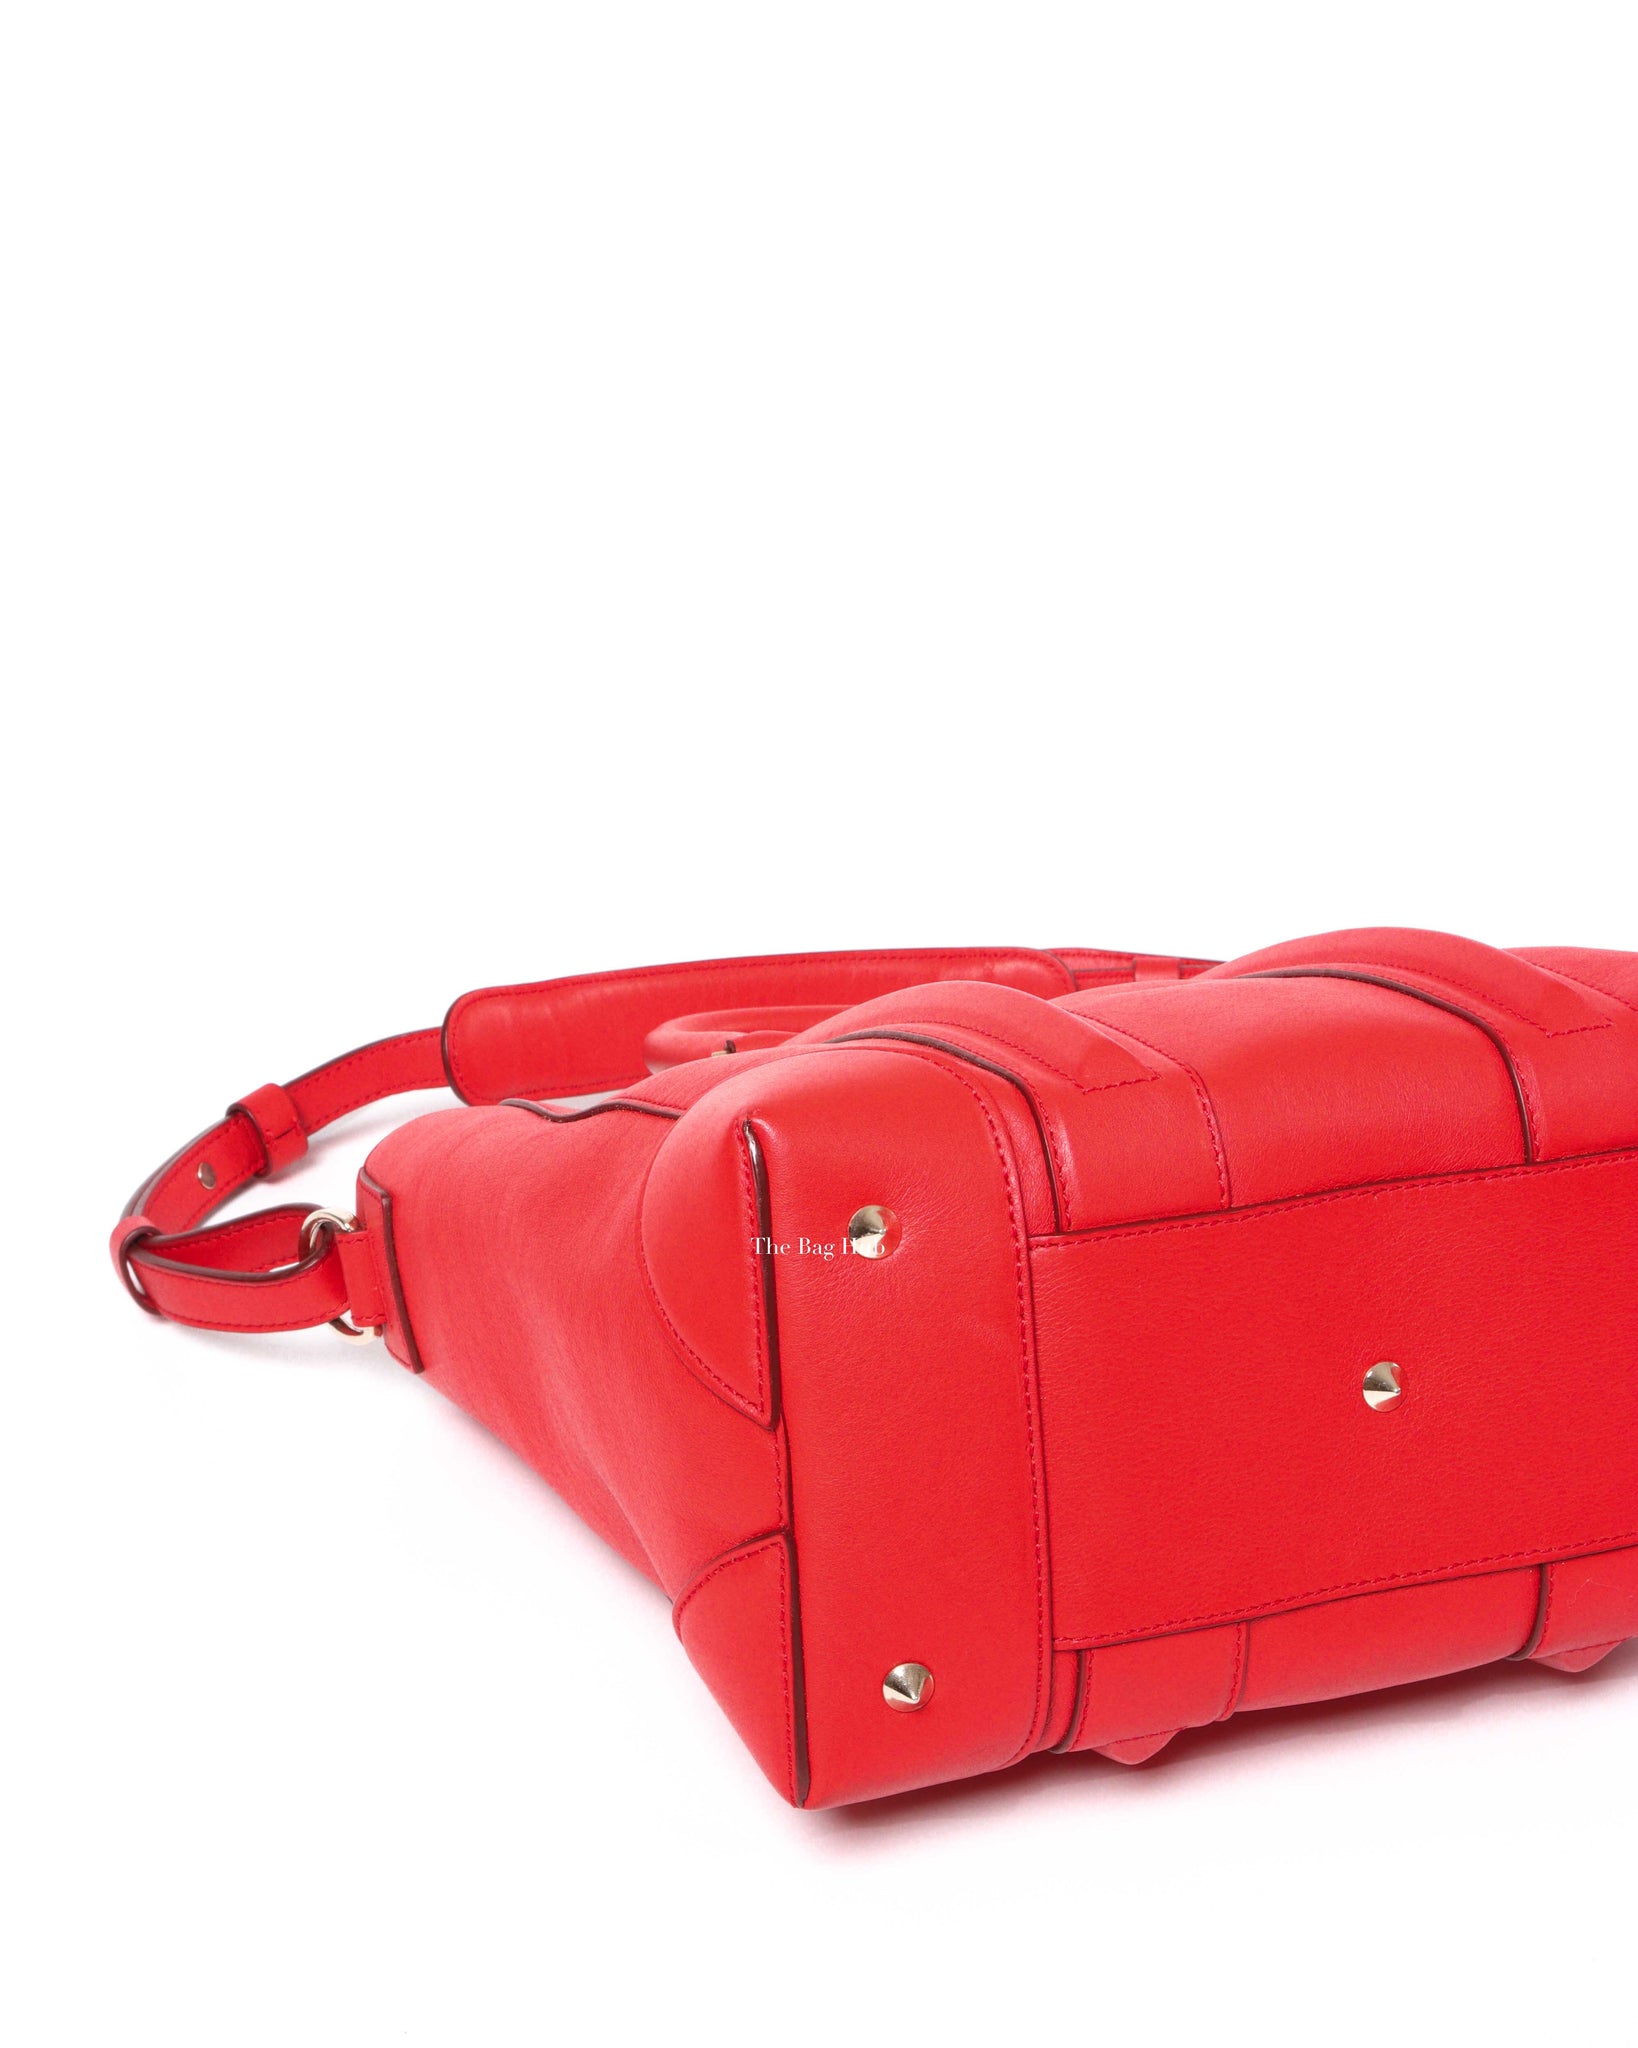 Givenchy Red Lucrezia Convertible Bag-9